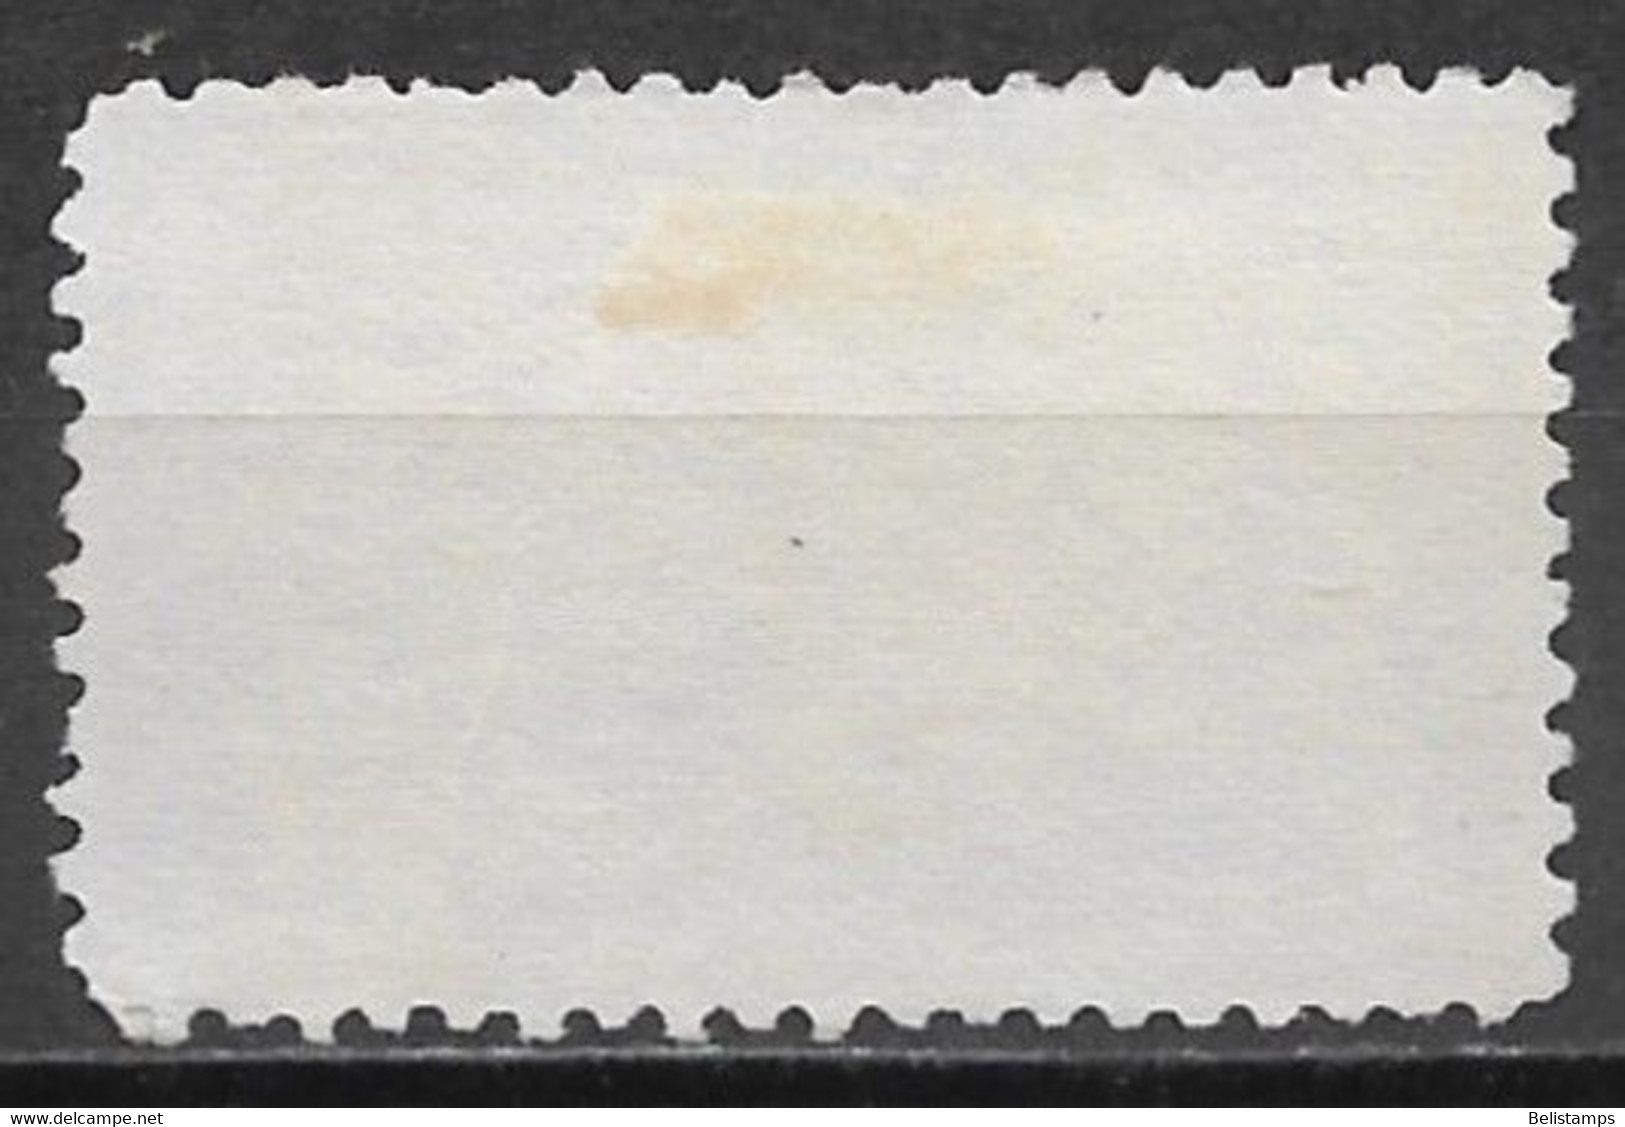 Spain 1941. Scott #C115 (U) Juan De La Cierva (1895-1936), Inventor Of The Autogiro - Used Stamps